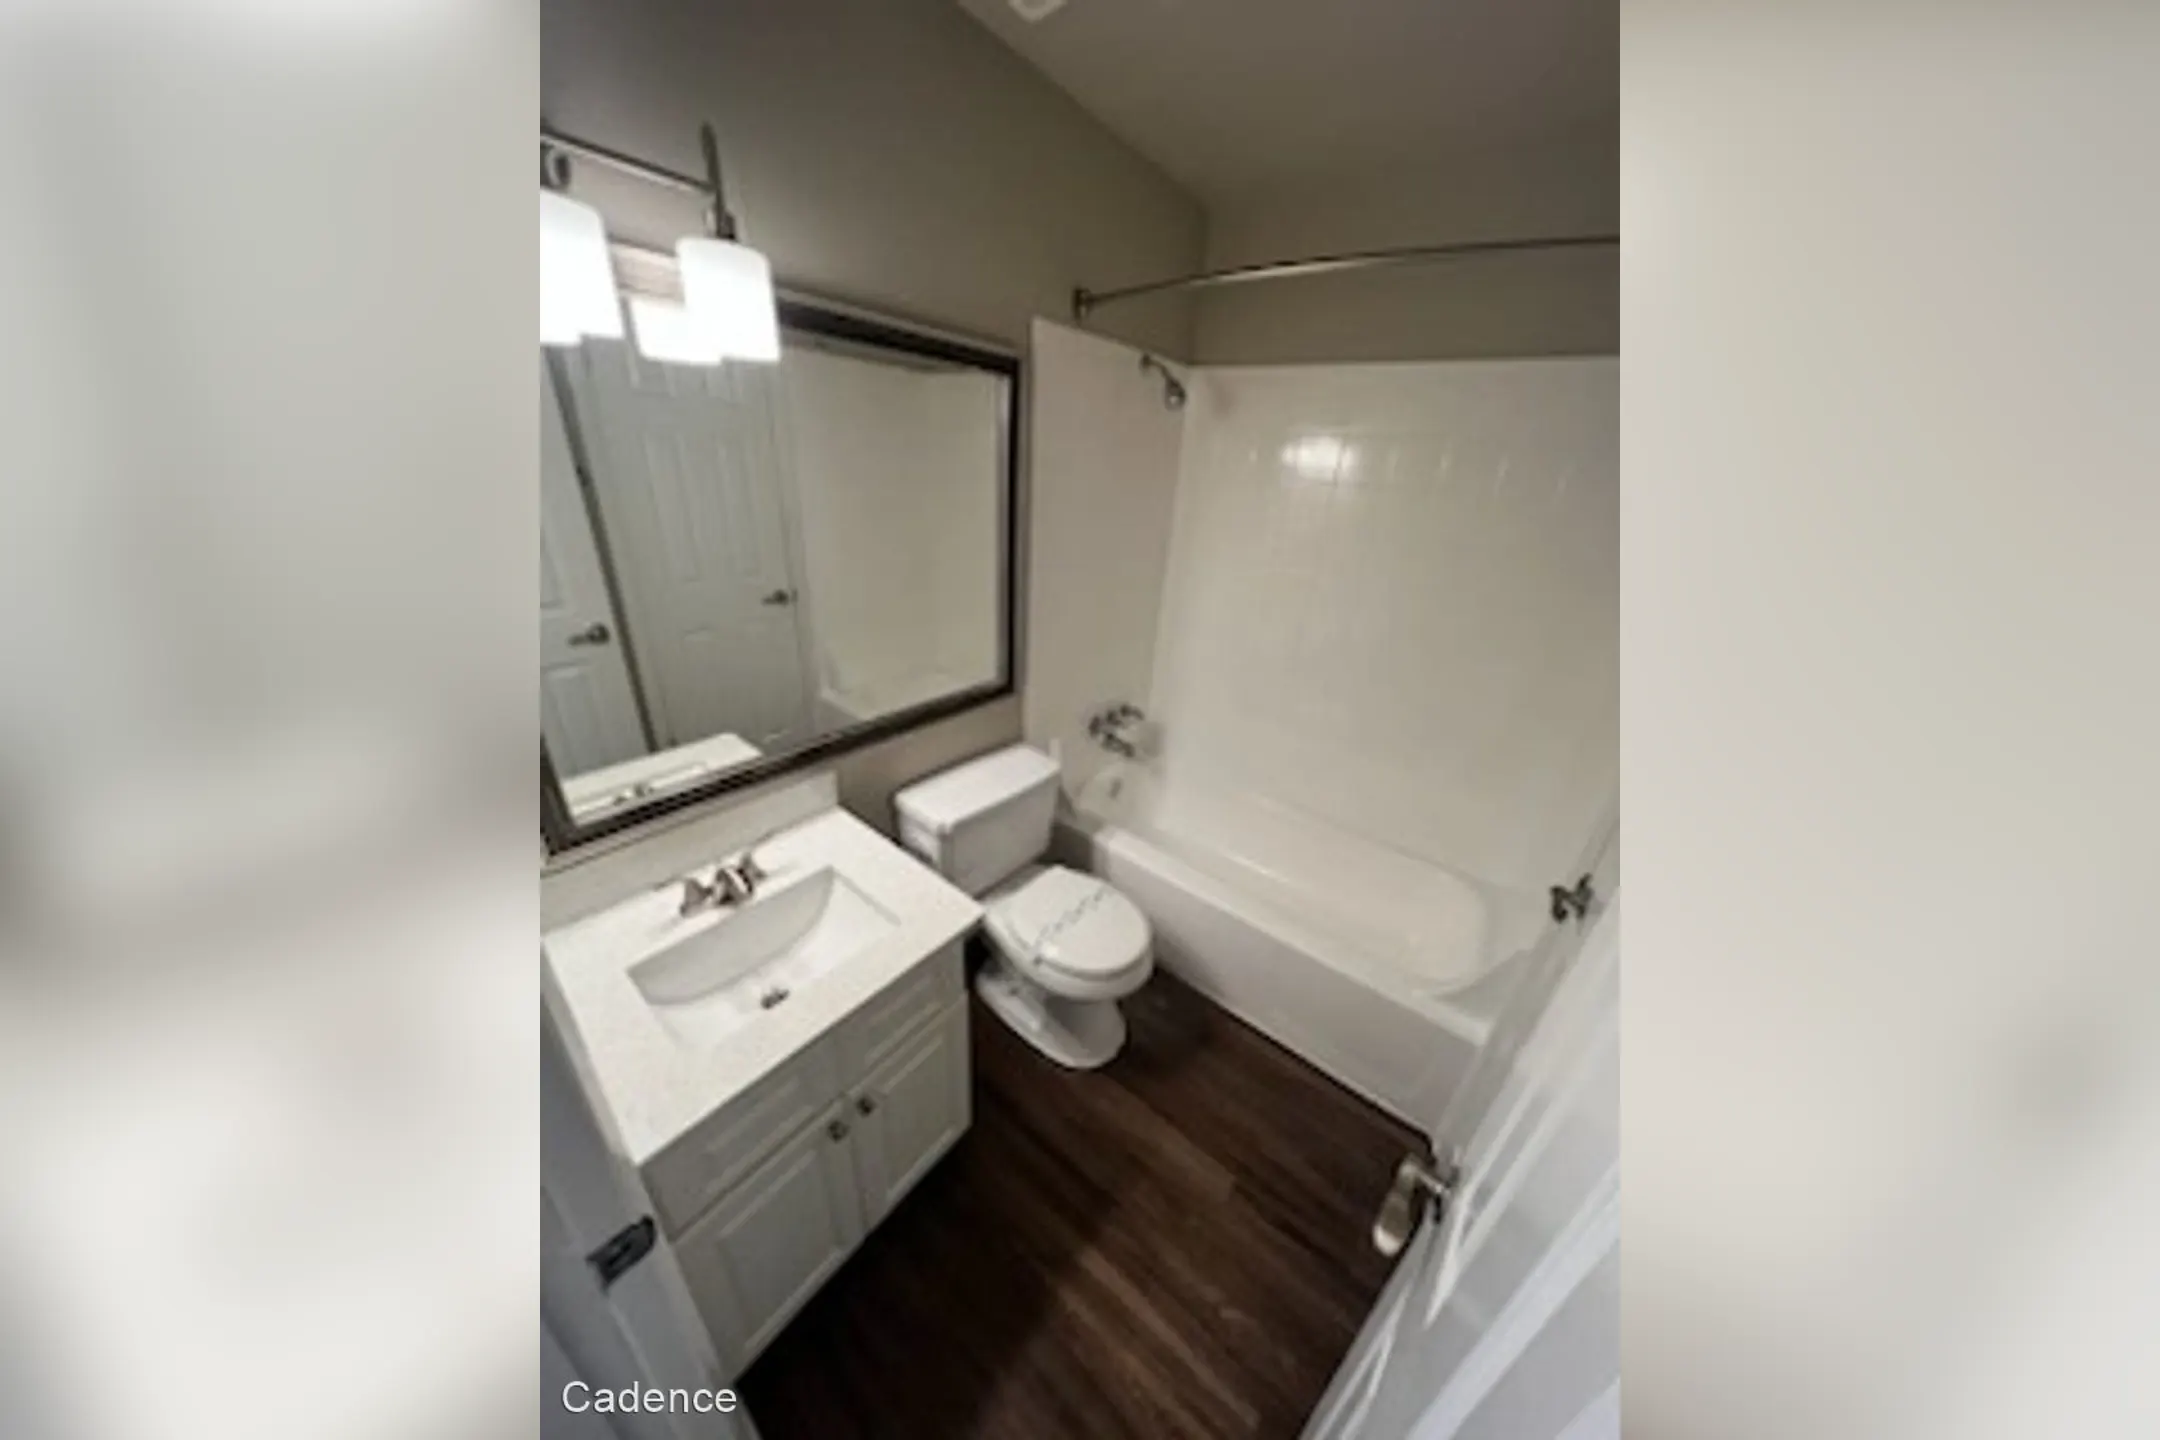 Bathroom - Cadence Crossing - Orlando, FL